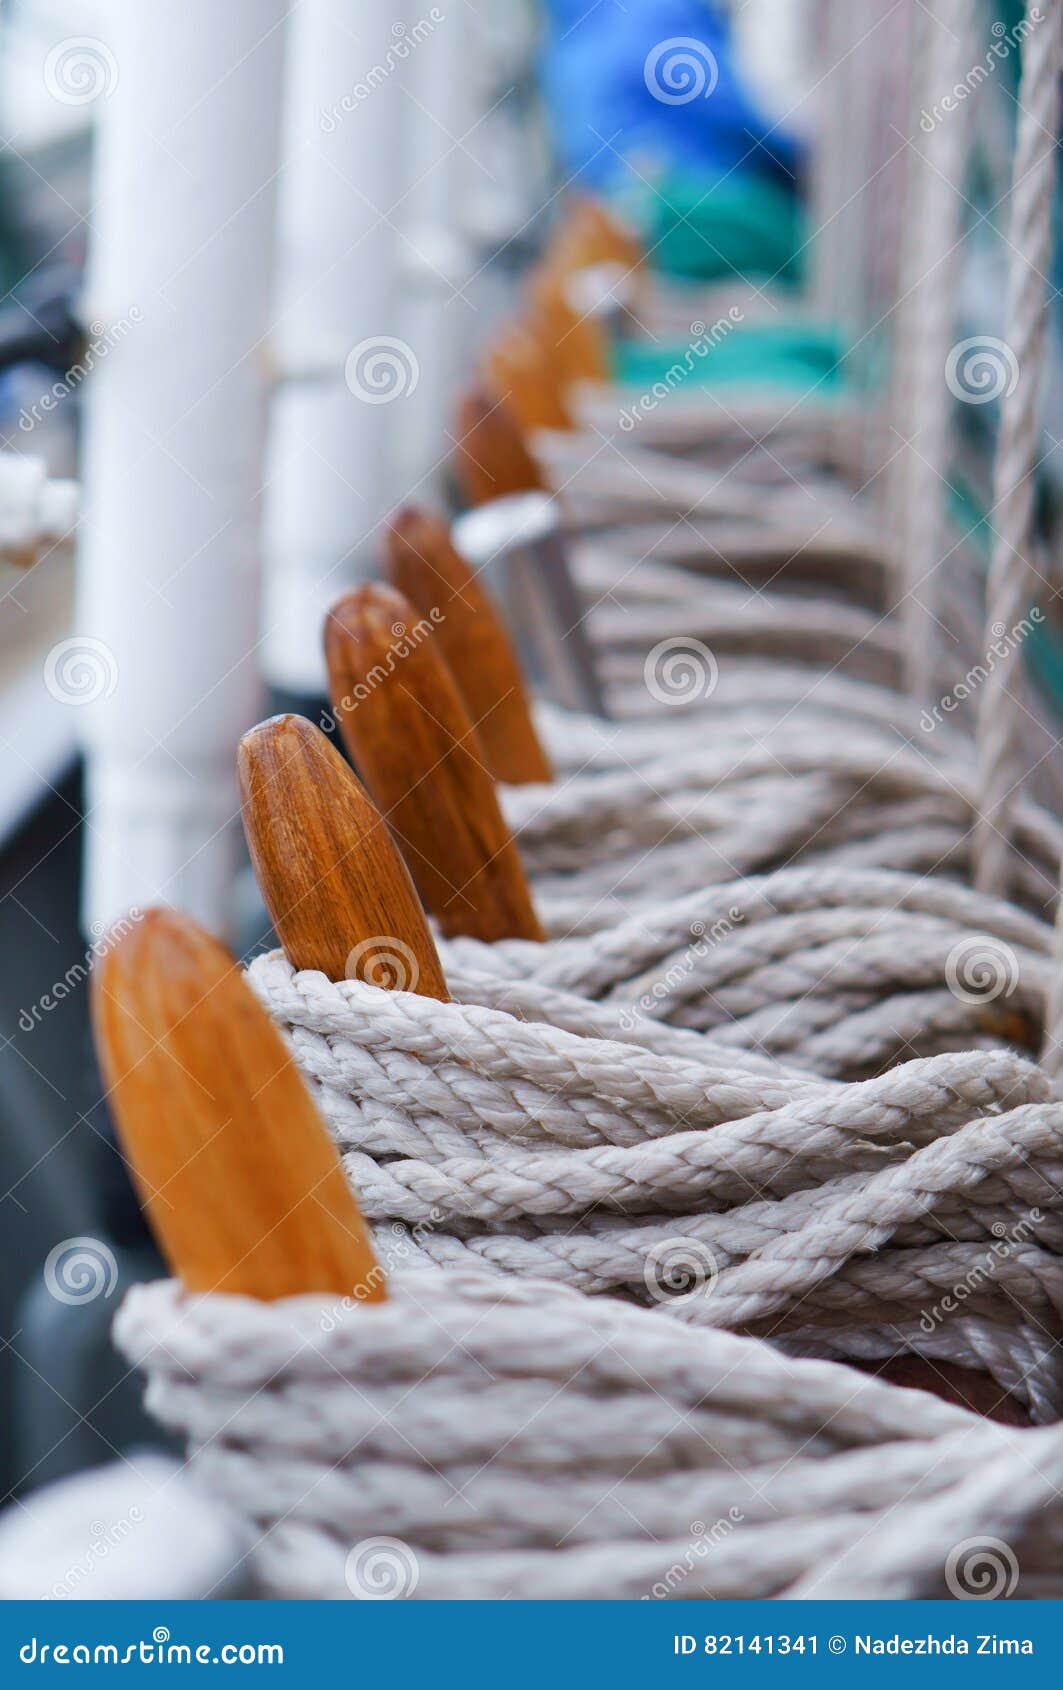 Kopel-pin strap, rope stock image. Image of pier, bollard - 82141341